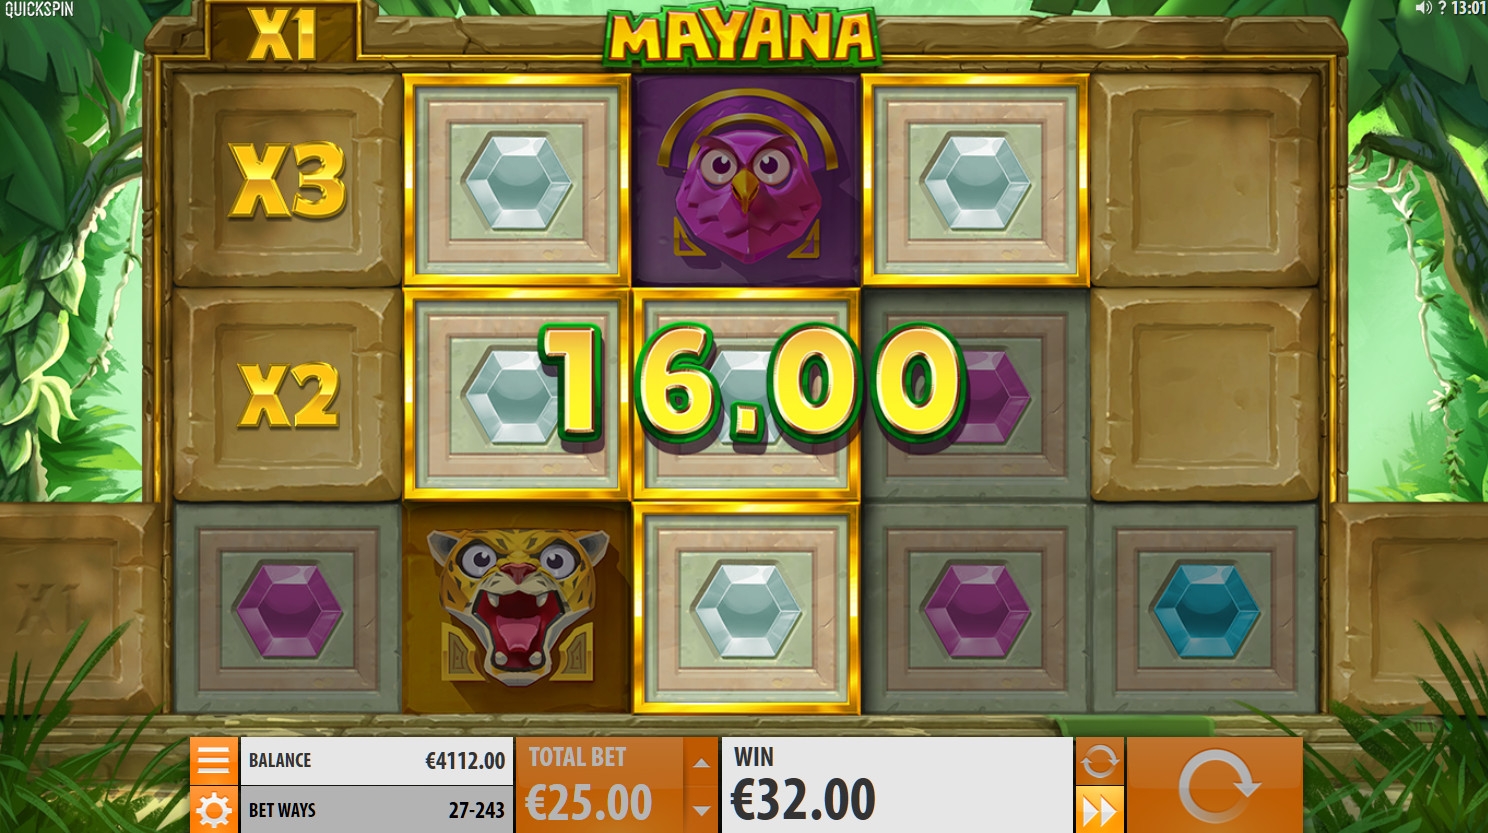 Mayana (Mayana) from category Slots